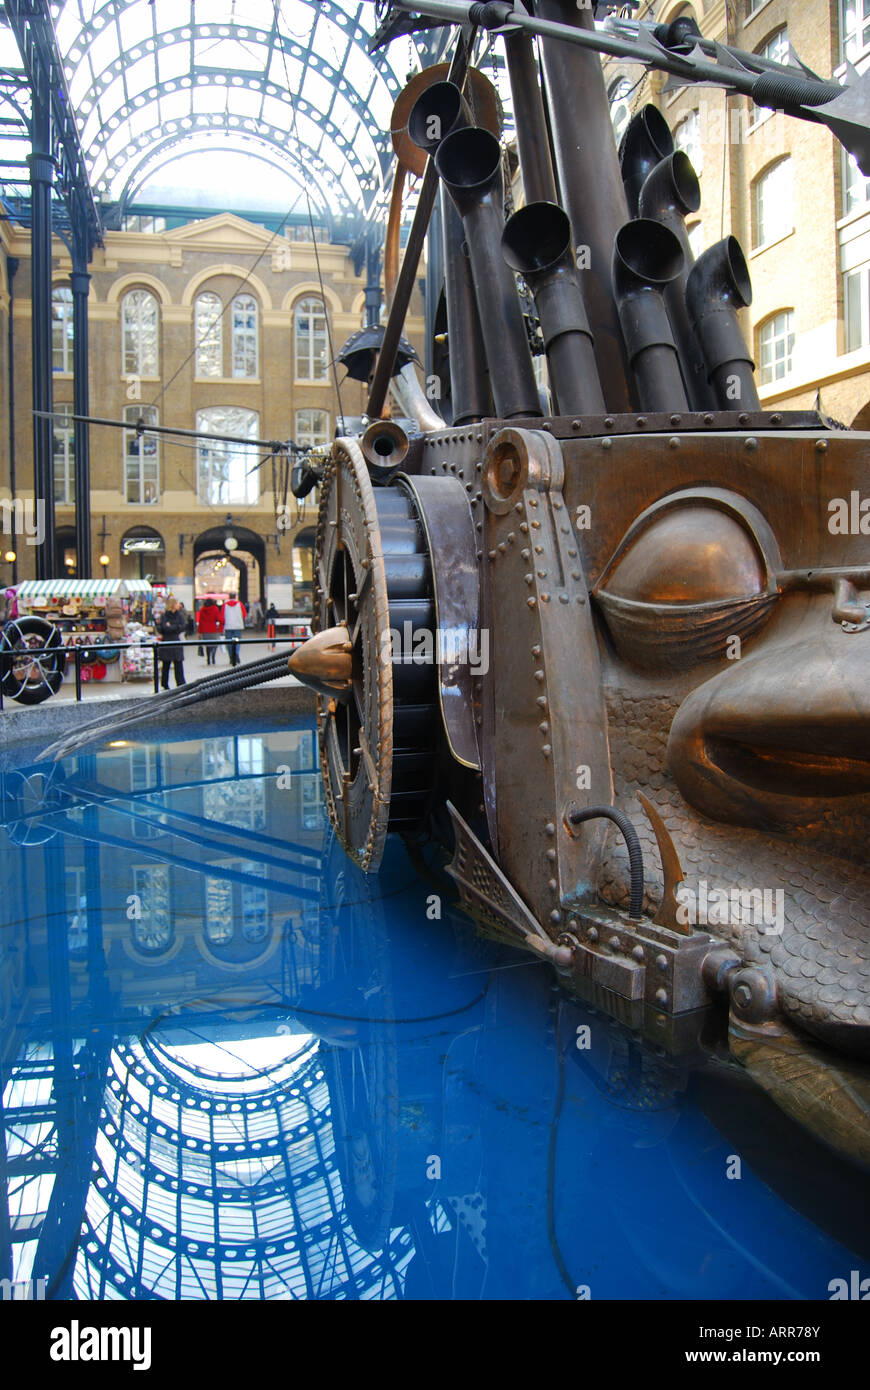 David Kemp's 'The Navigators' Sculpture, Hay's Galleria Arcade, South Bank, Southwark, London, England, United Kingdom Stock Photo